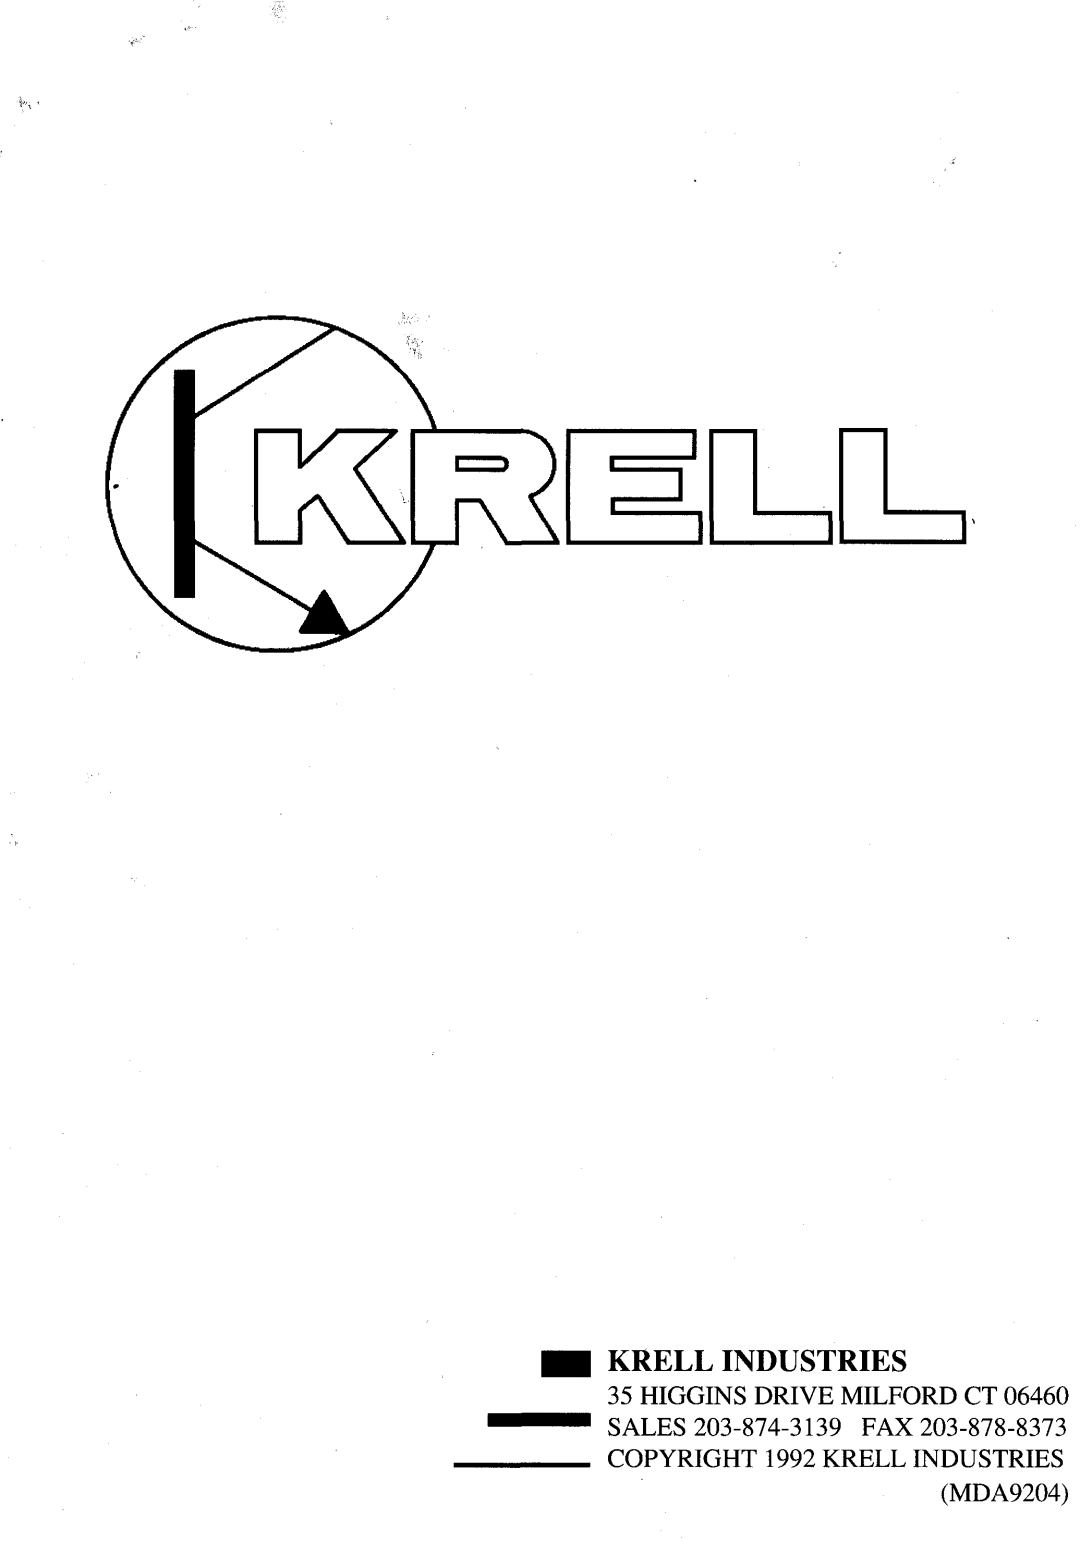 Krell Industries MDA-300/500 manual Krell Industries, COPYRIGHT1992 KRELL INDUSTRIES MDA9204 